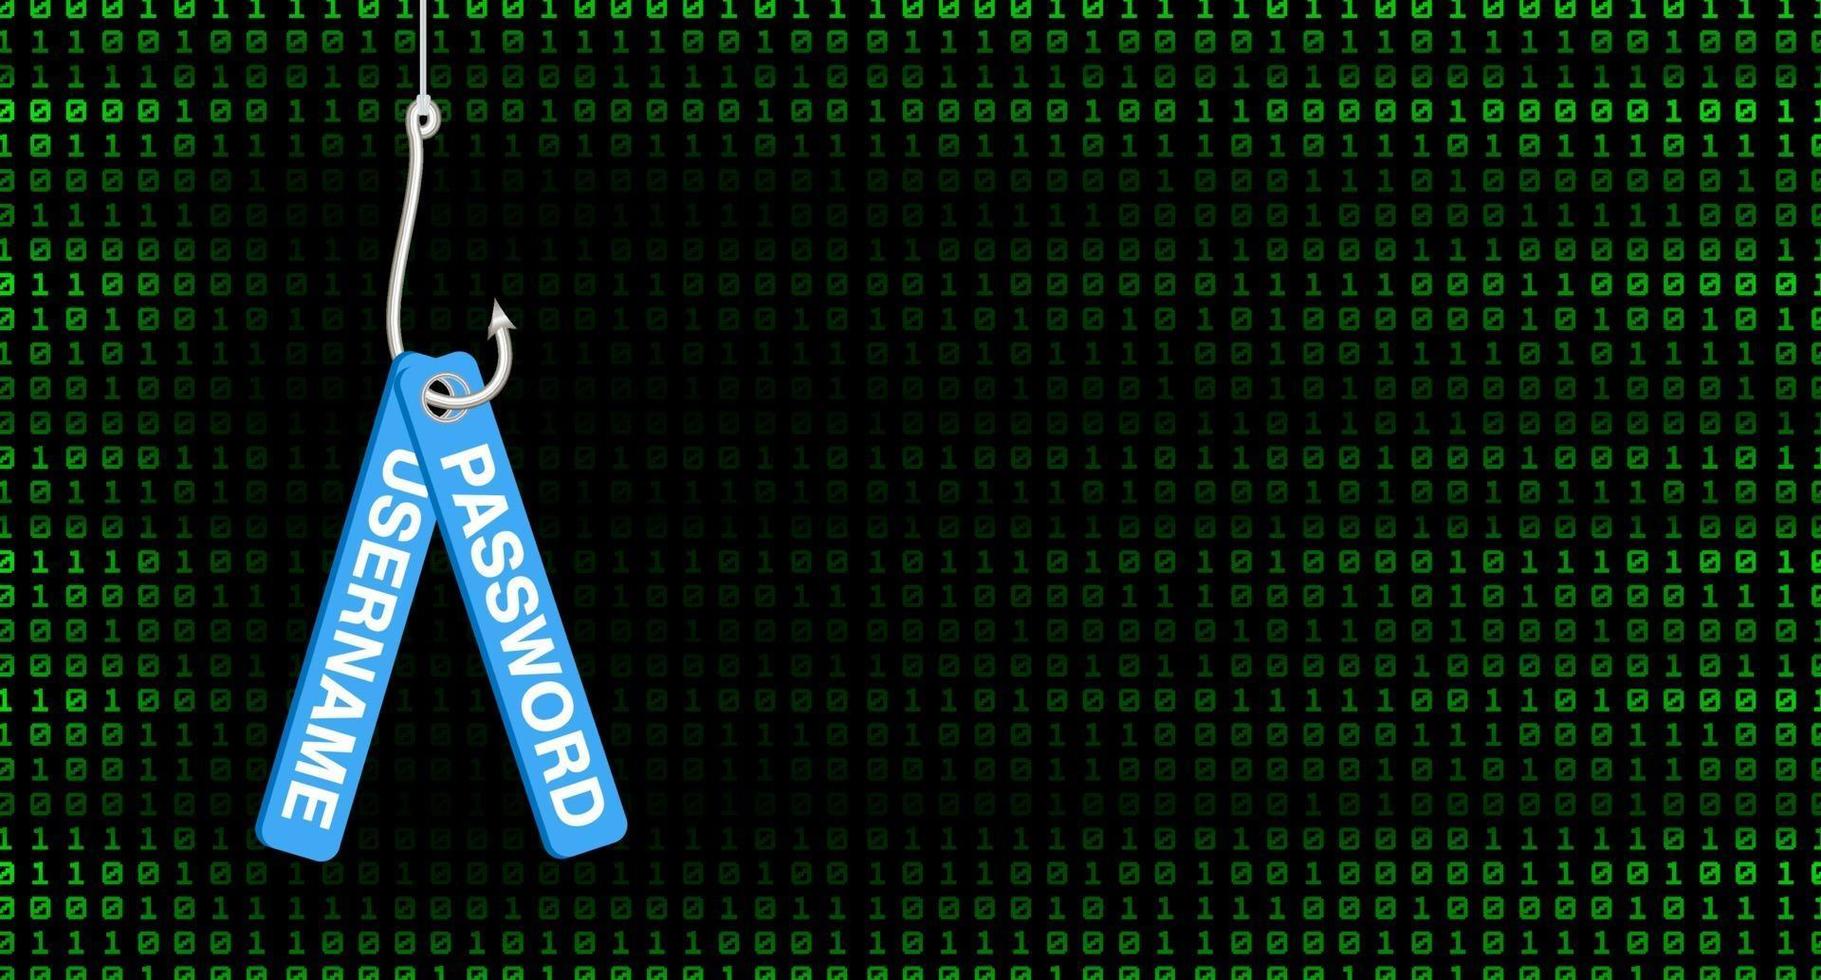 Angelhaken Phishing Hack Benutzername und Passwort vektor